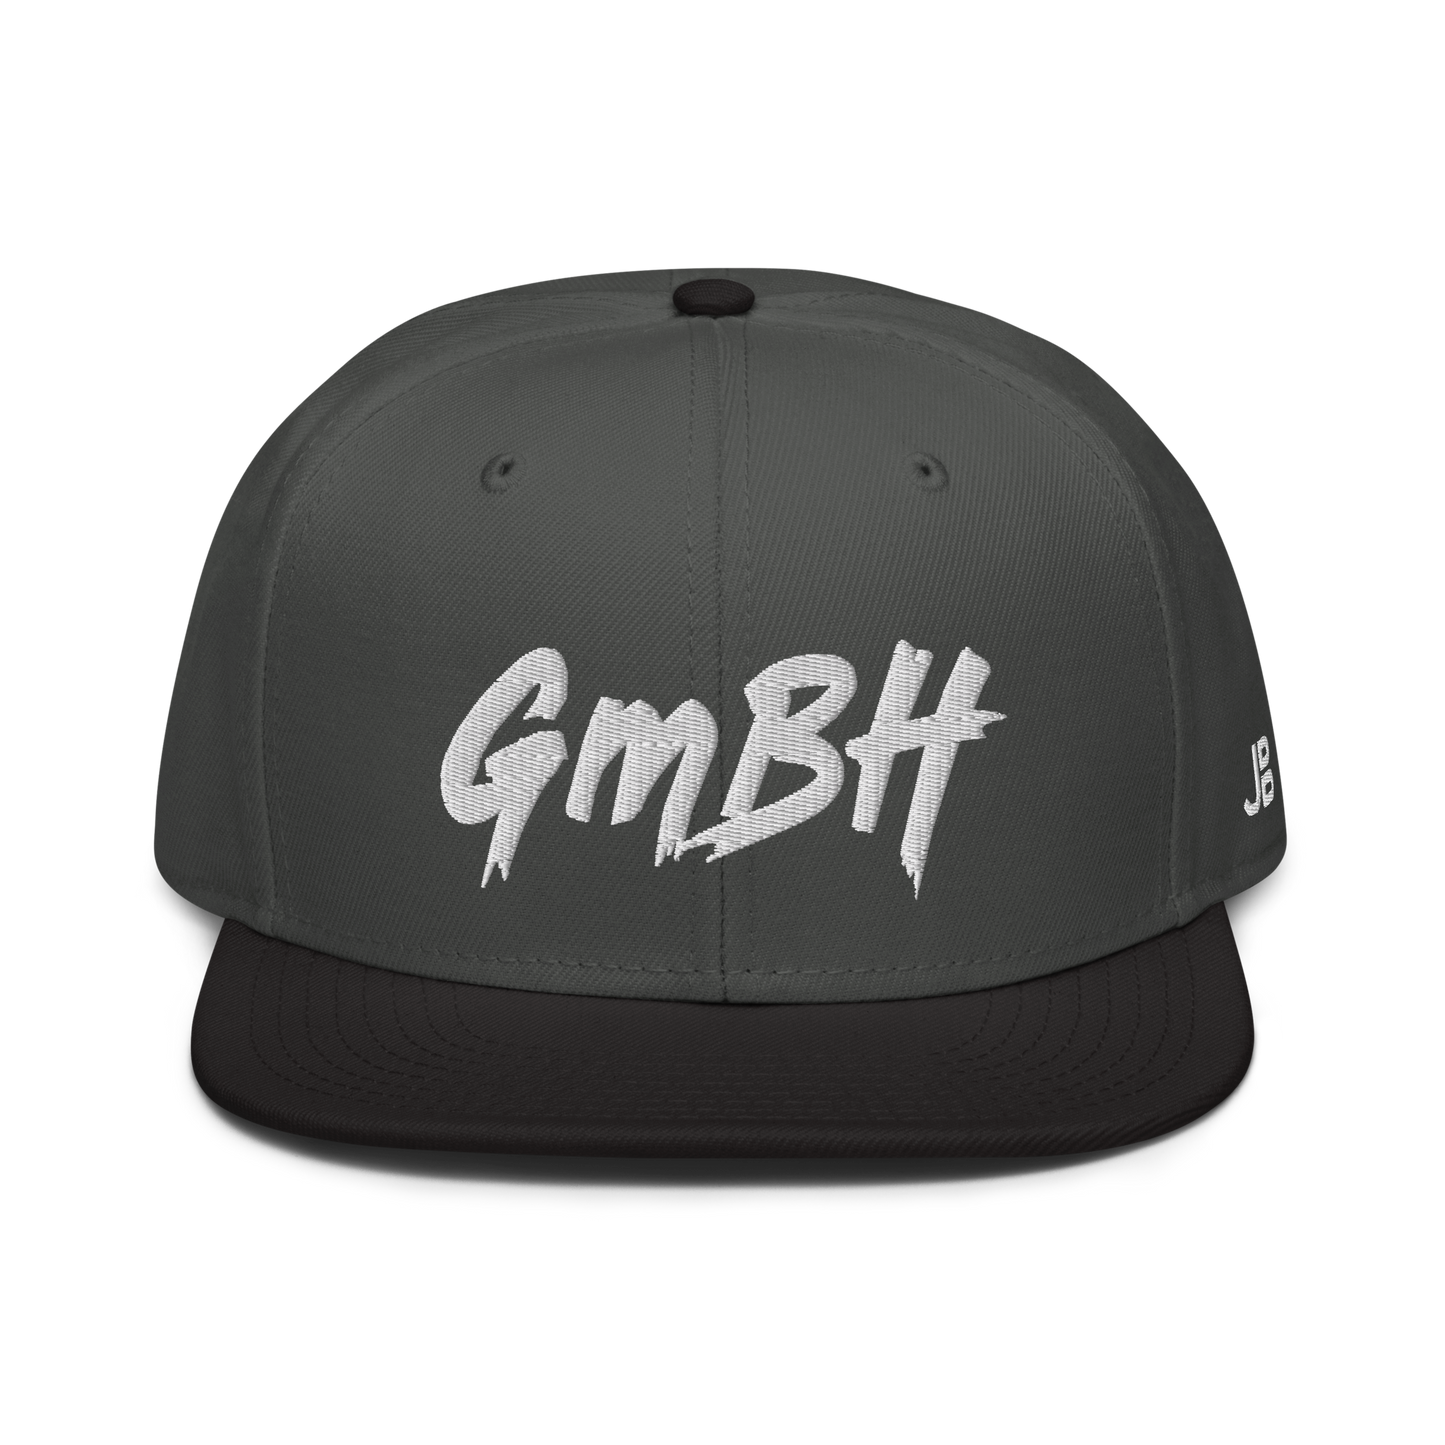 GMBH - Snapback Cap